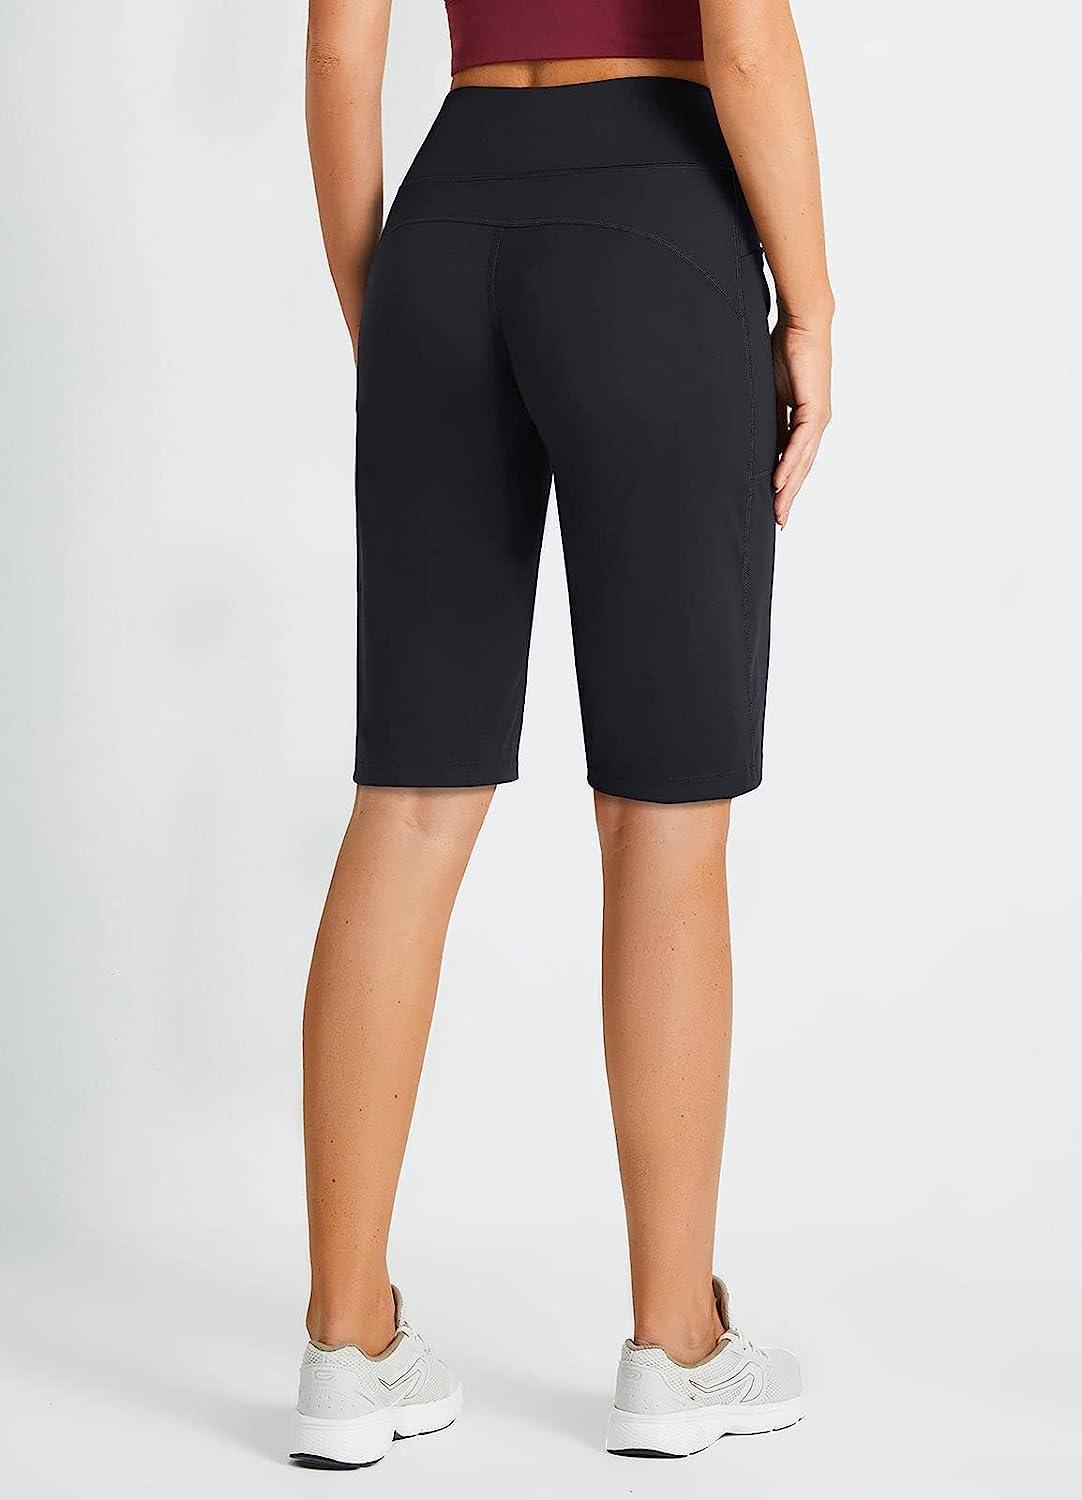 BALEAF Women's 12 Bermuda Shorts Athletic Long Shorts Knee Length Running  Workout Stretch Pockets Black X-Large